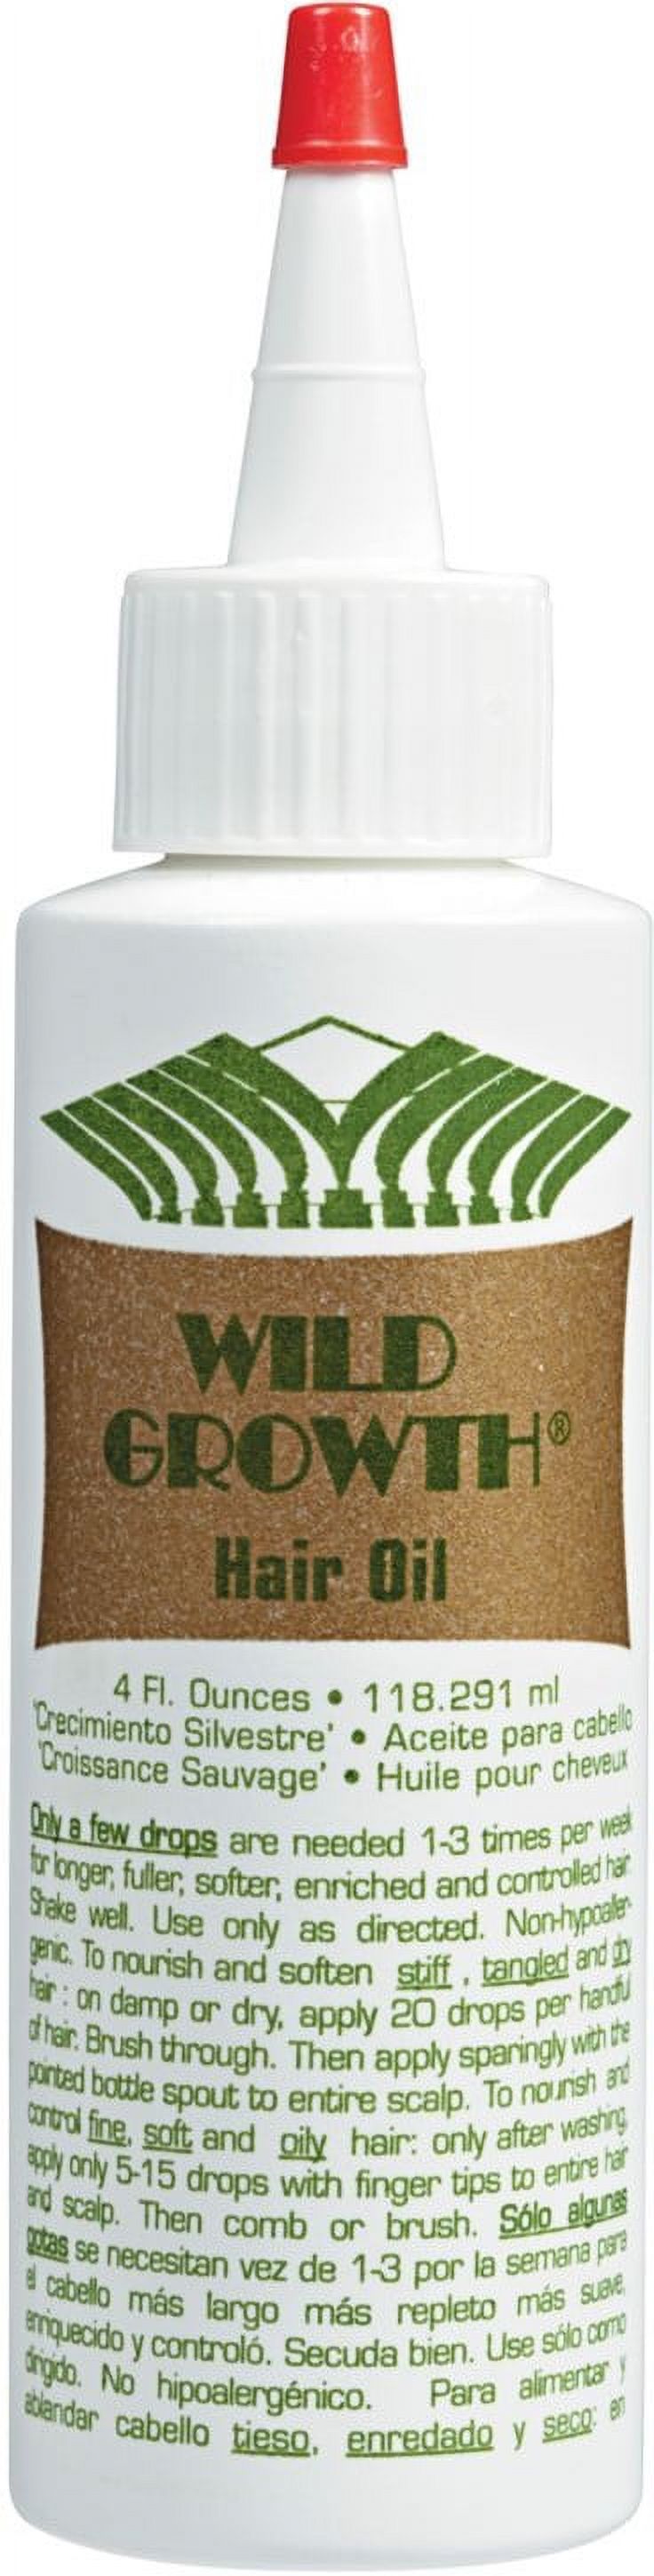 Wild Growth Hair Oil, 4 fl oz - image 1 of 4